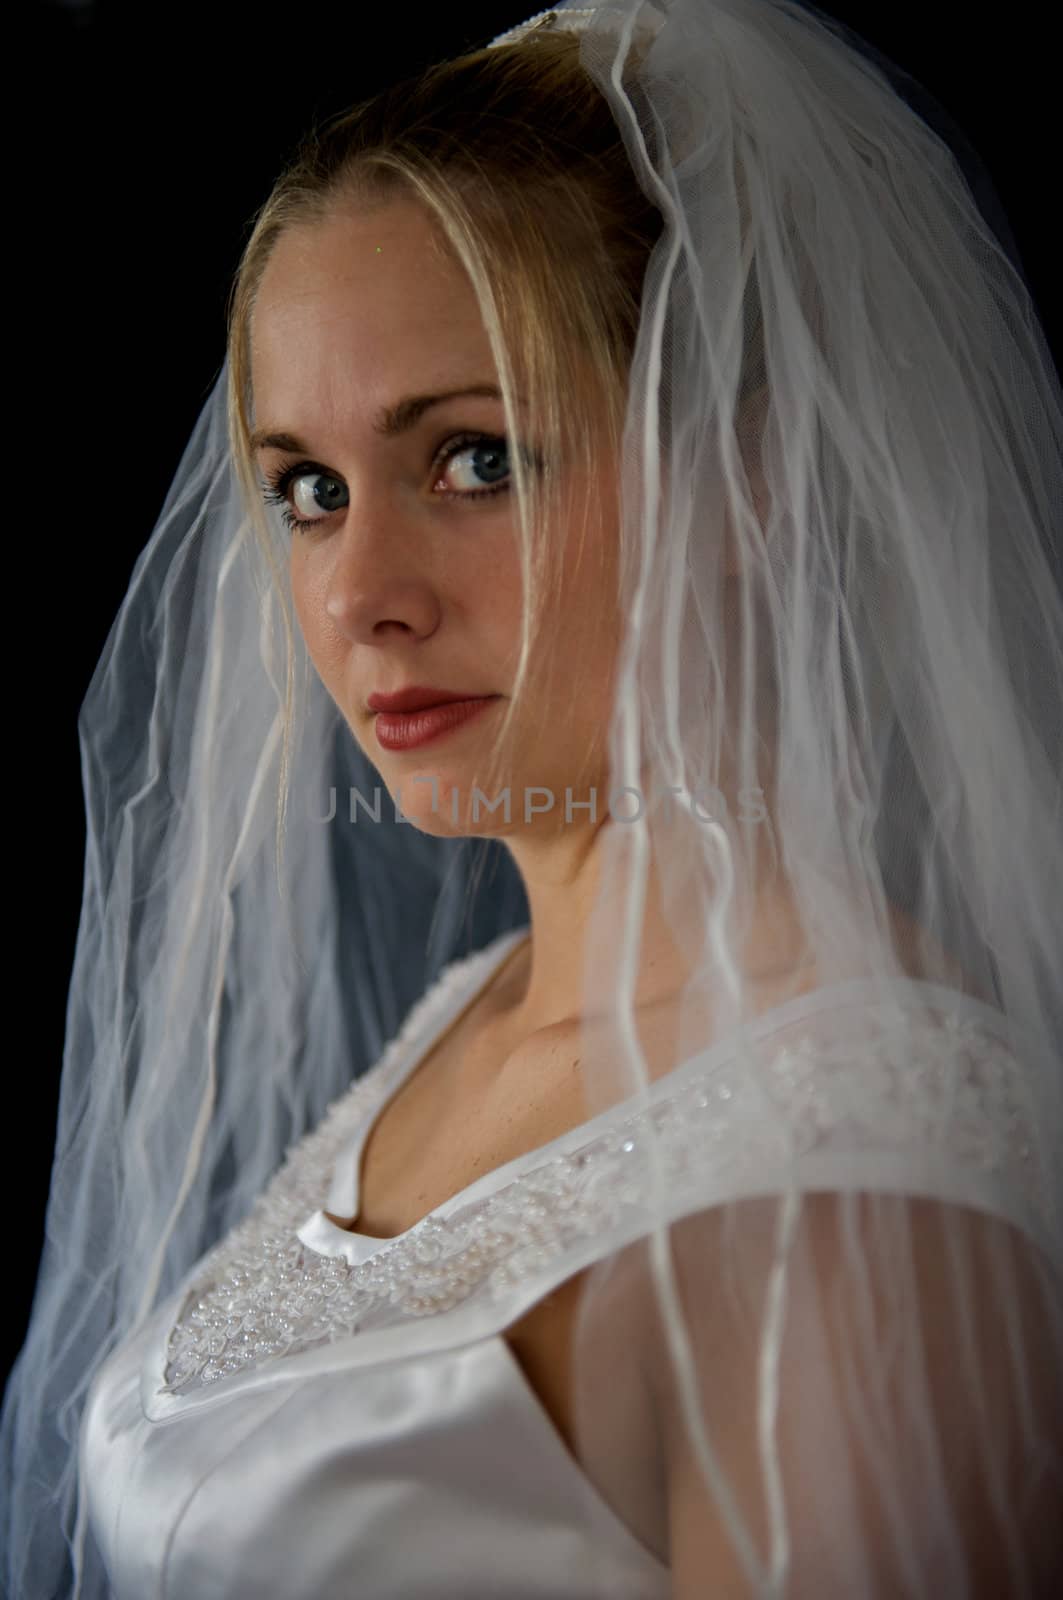 Blonde bride in veil and dress by dmvphotos